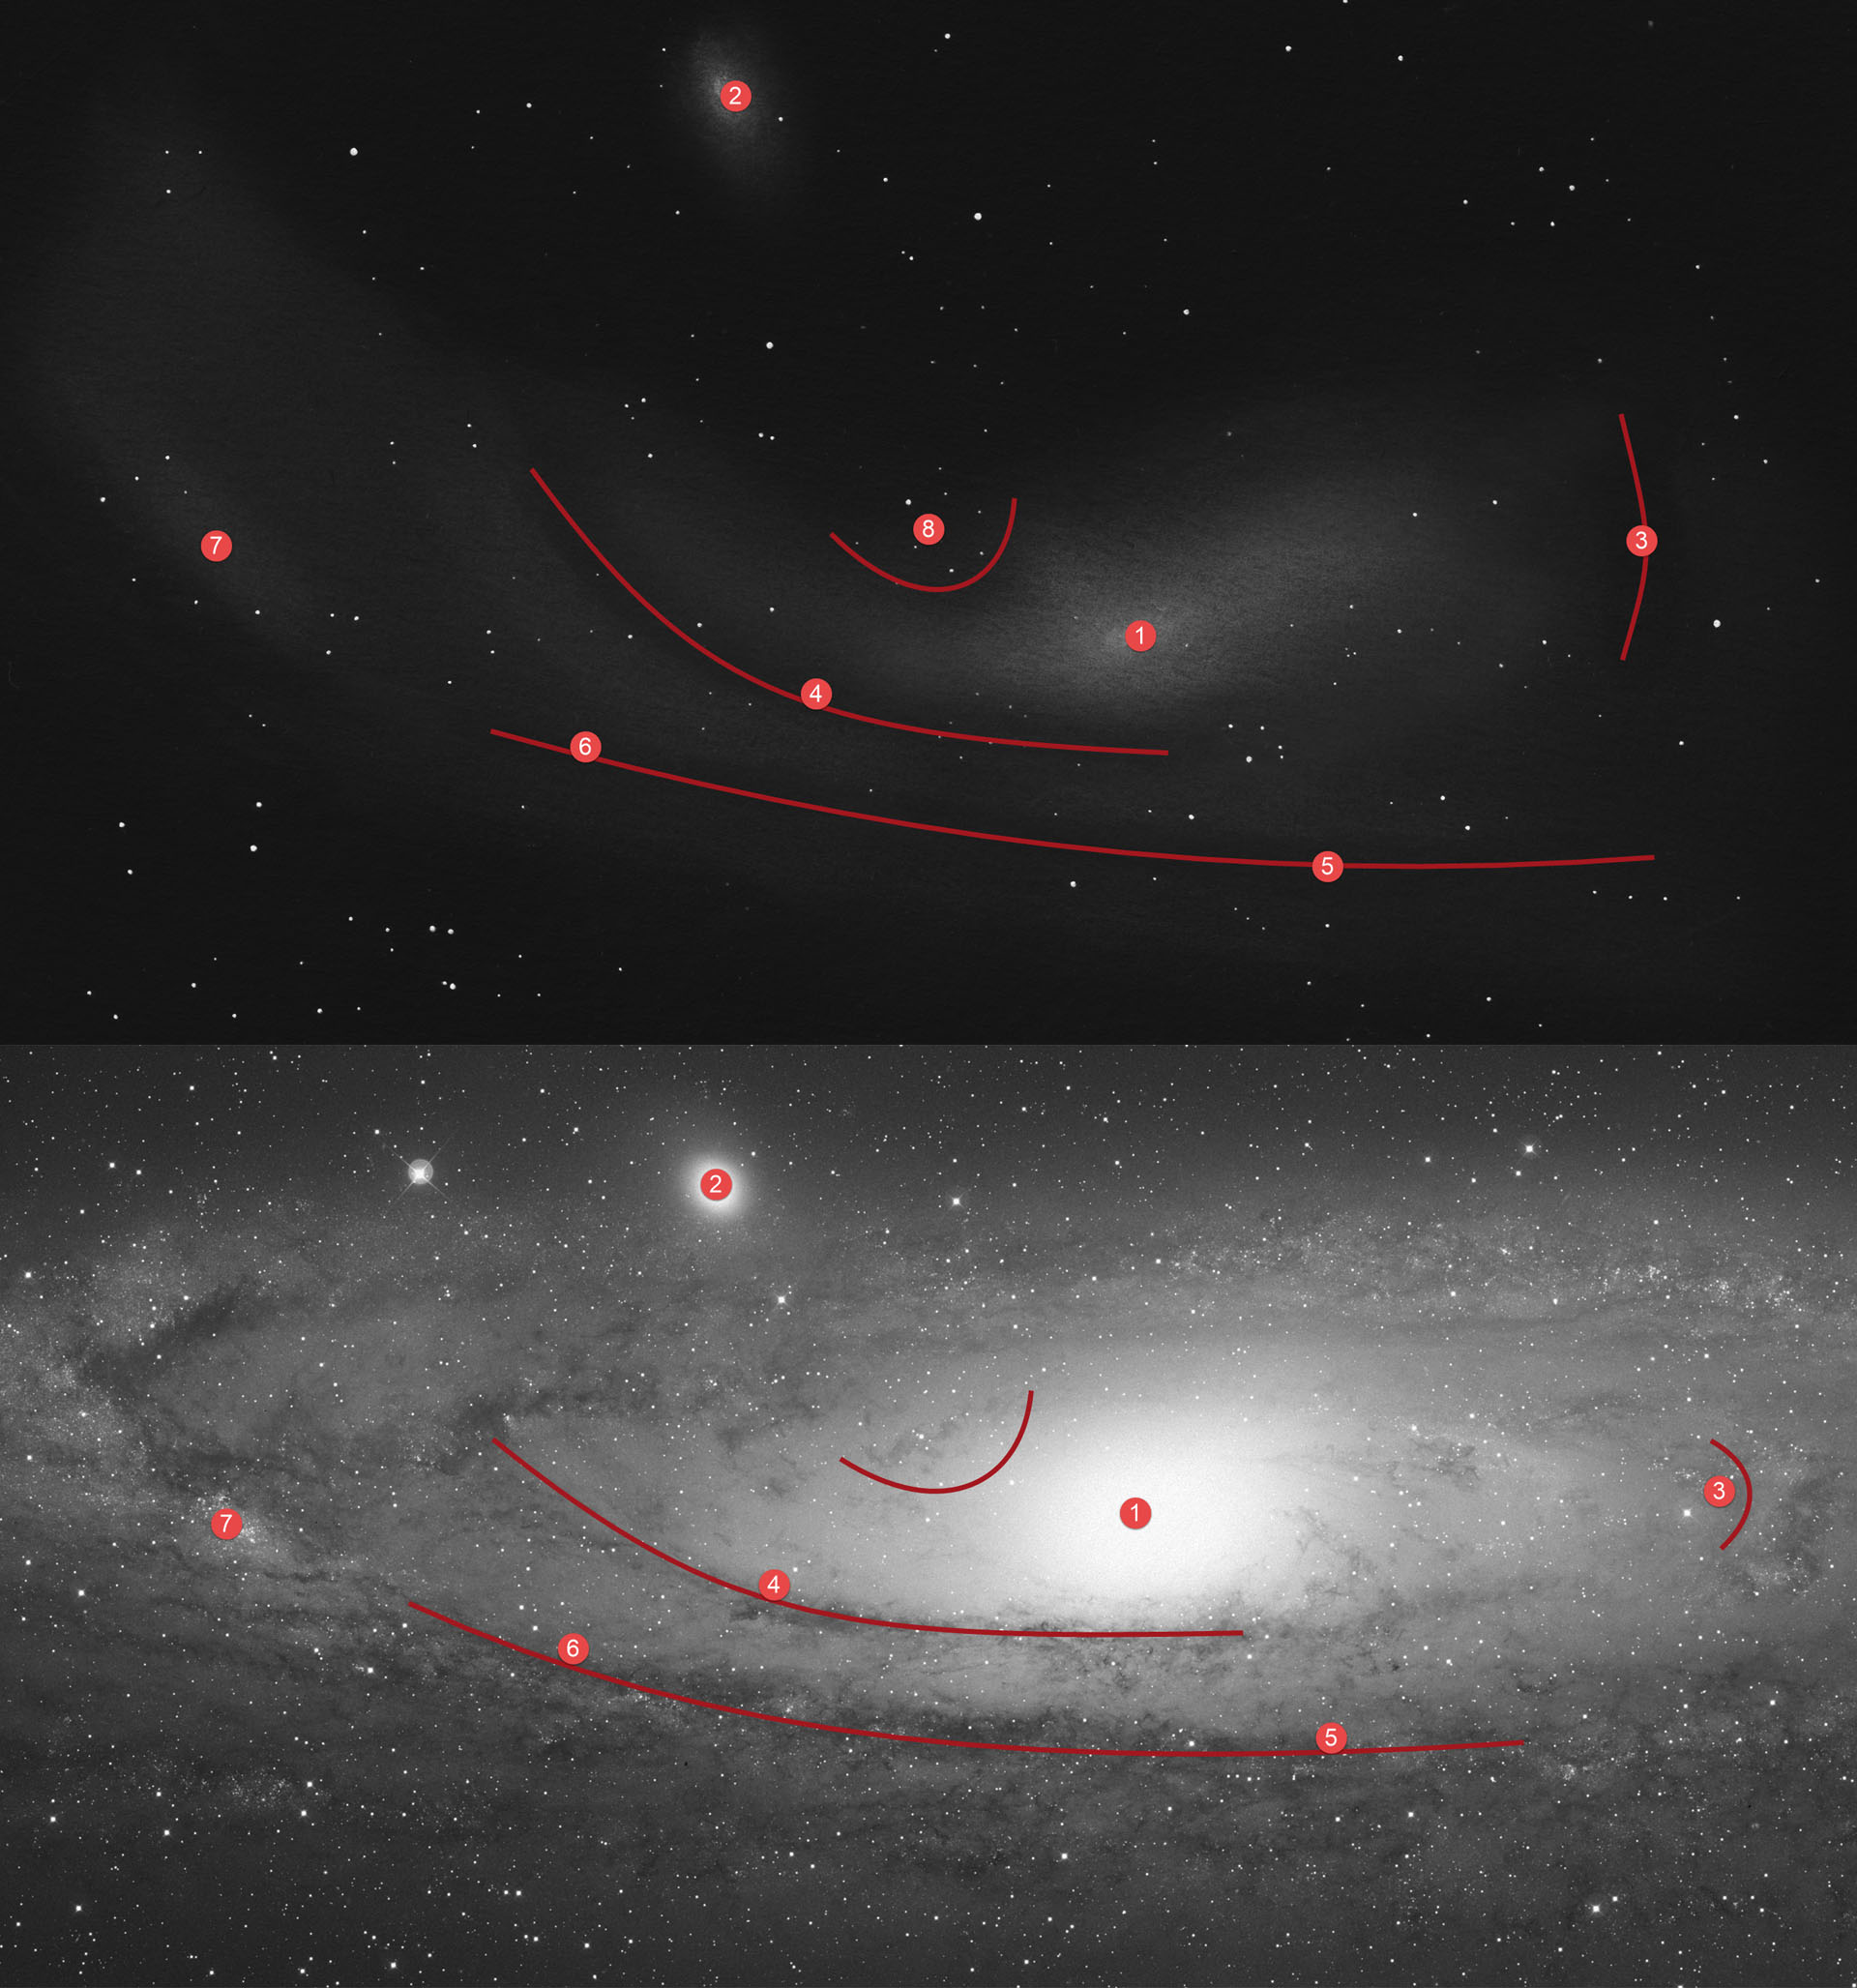 Usporedba skice i fotografije M31